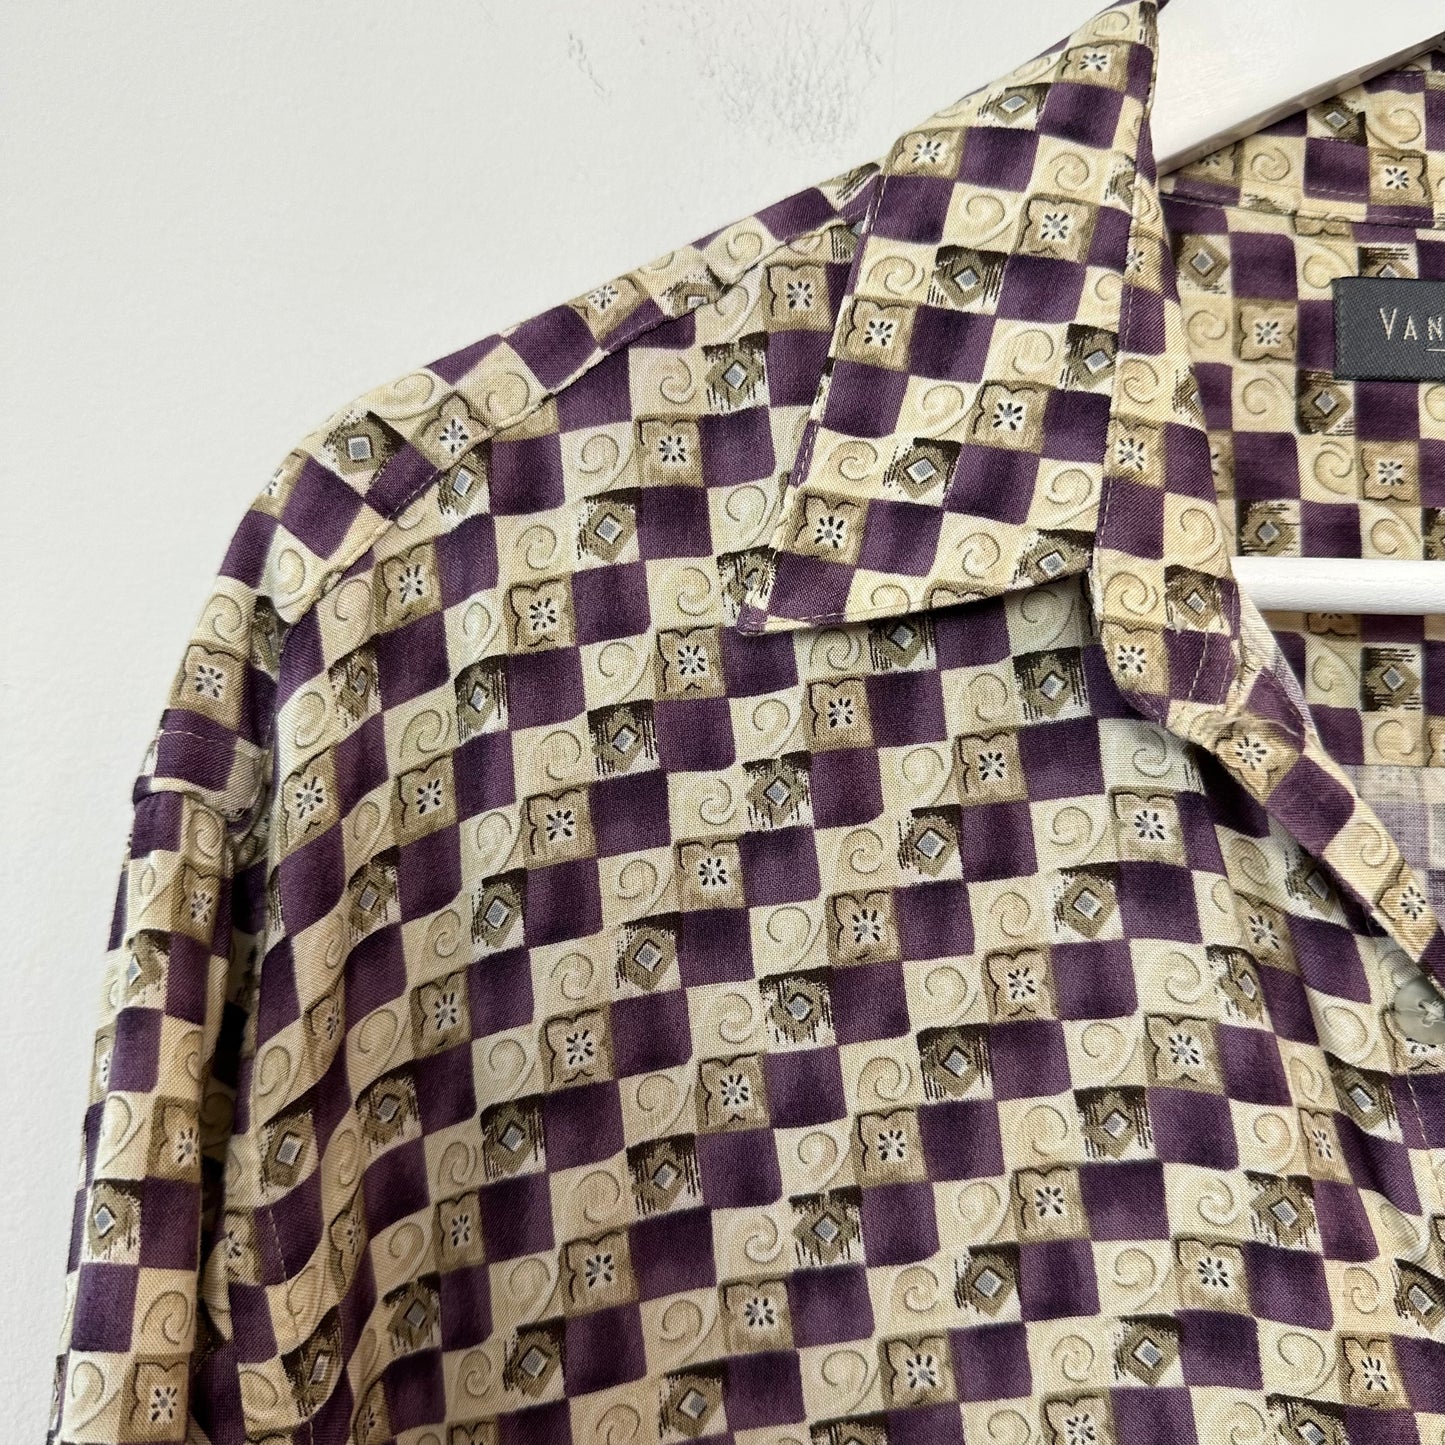 Retro Style Van Heusen Checkered Print Short Sleeve Button Down Collared Shirt Rayon Medium